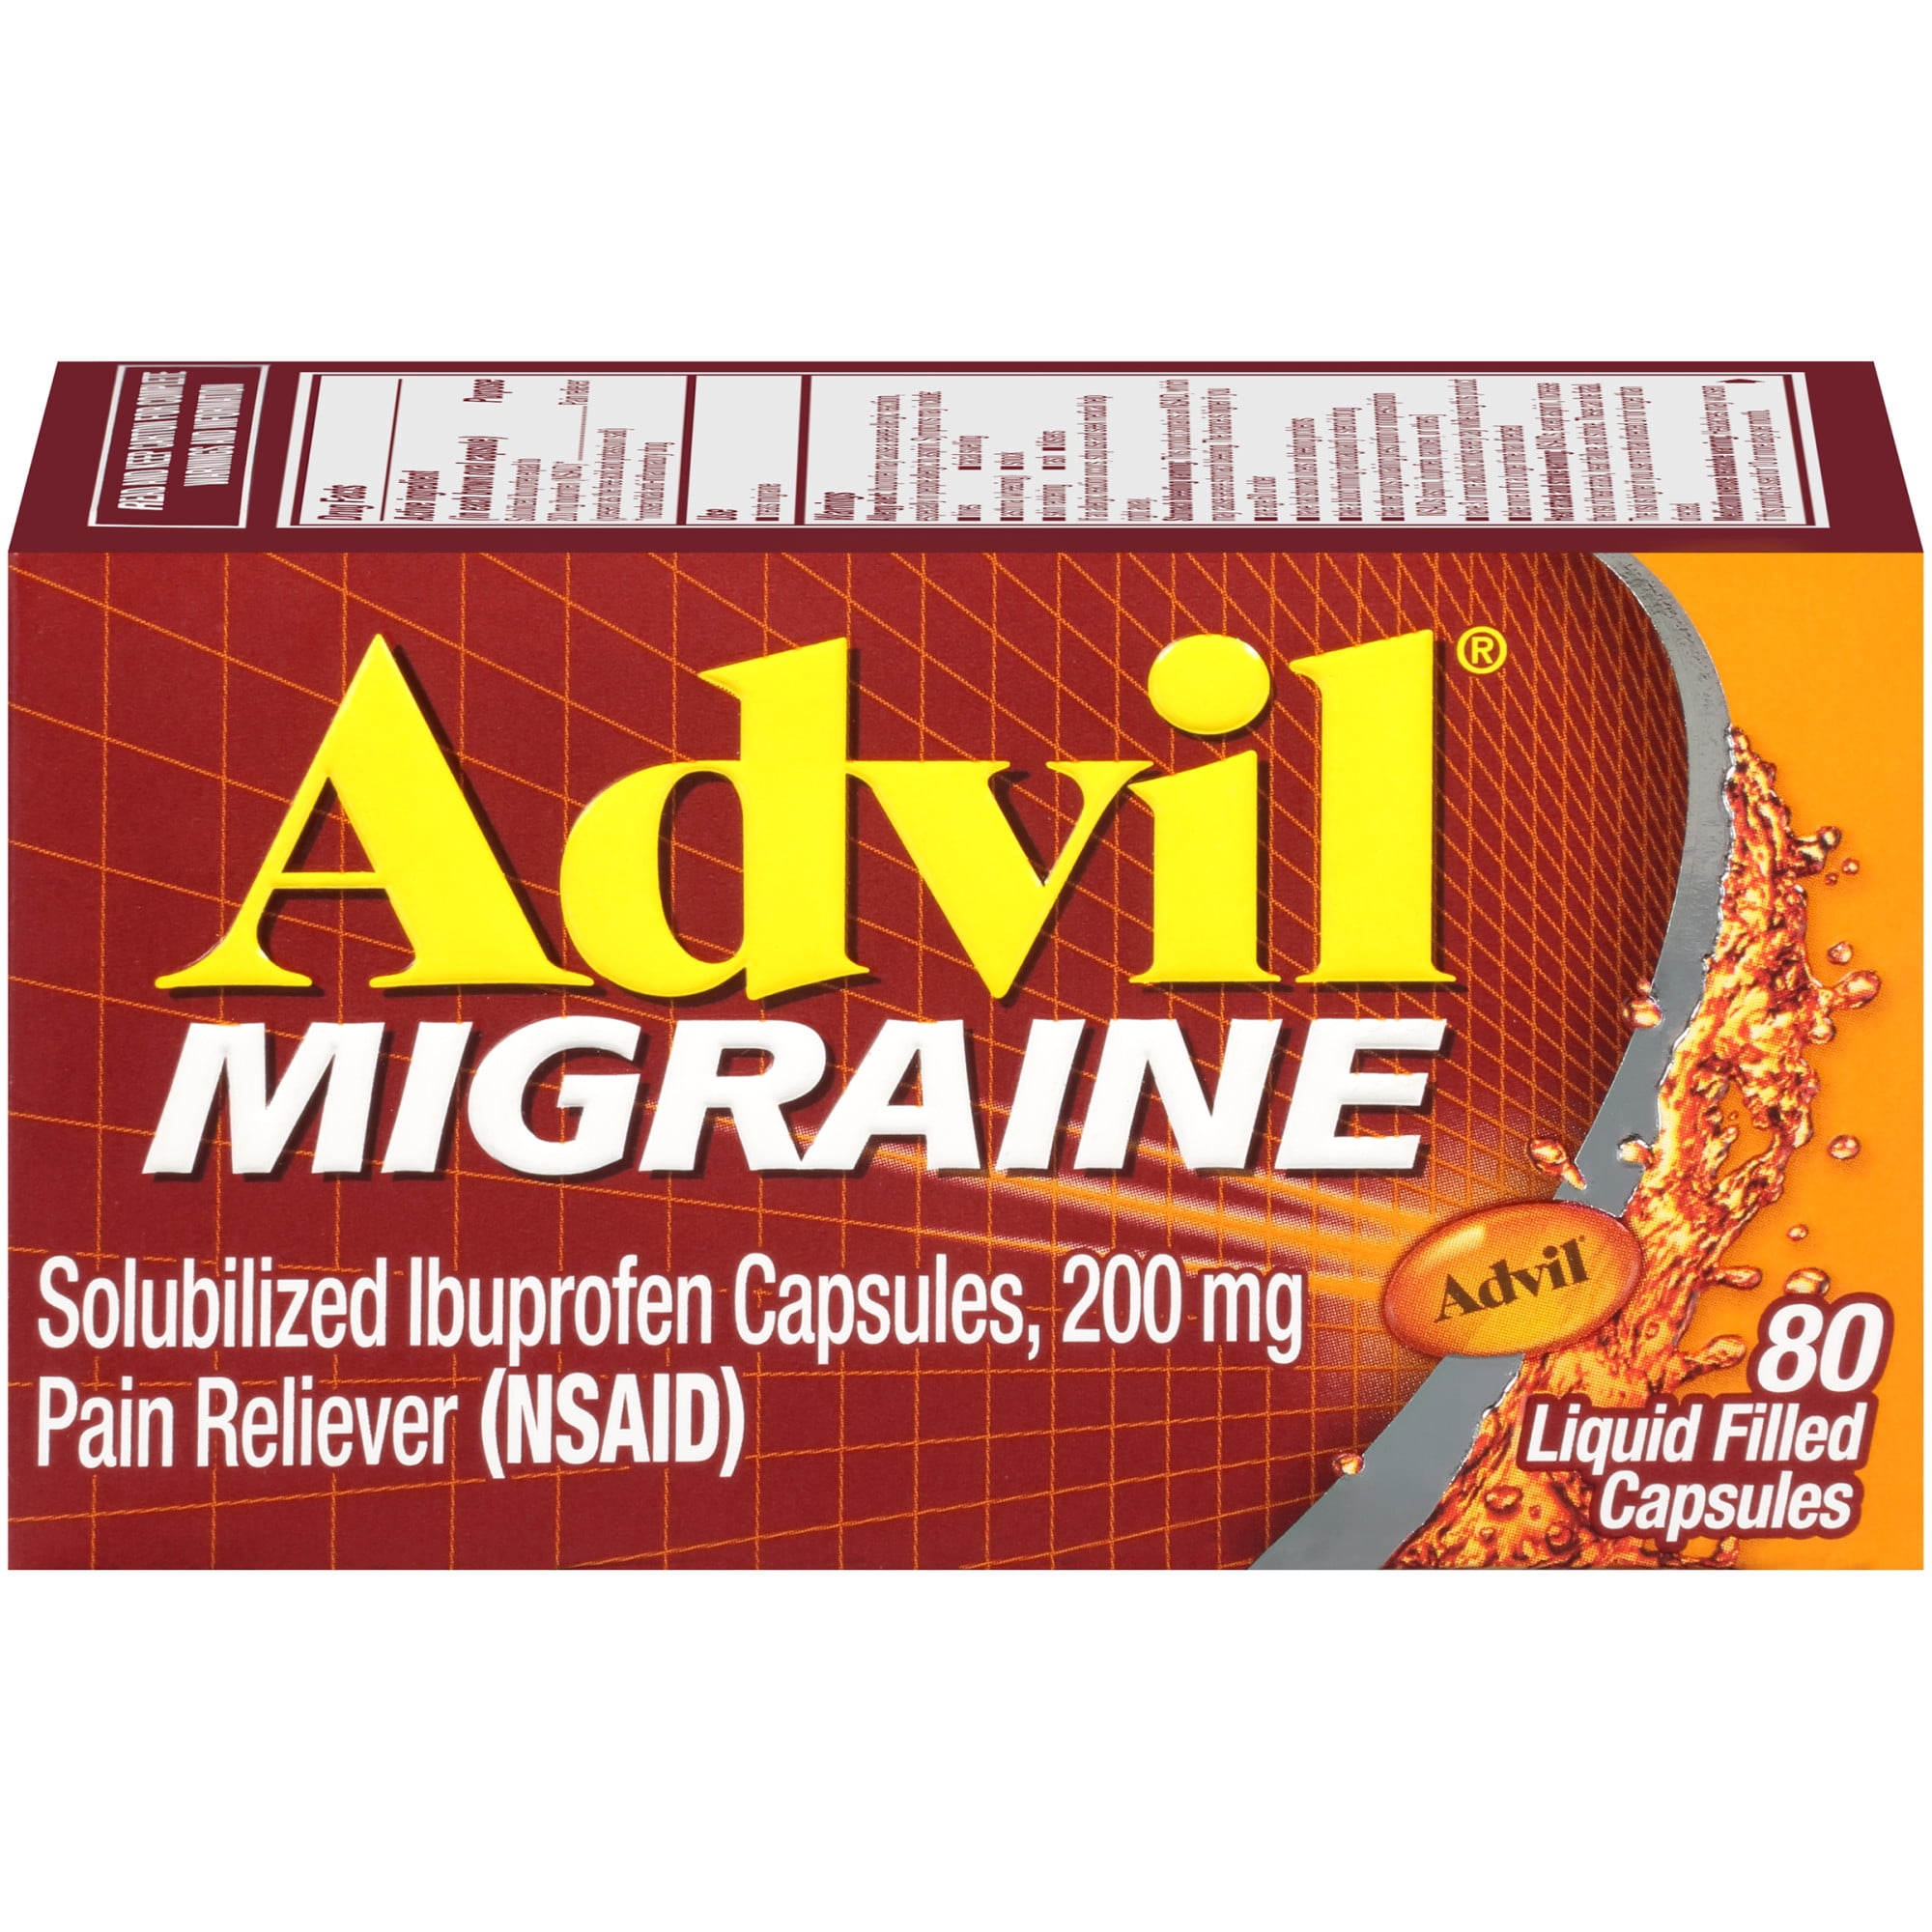 Advil Migraine Pain and Headache Reliever Ibuprofen, 200 Mg Liquid Filled Capsules, 80 Count